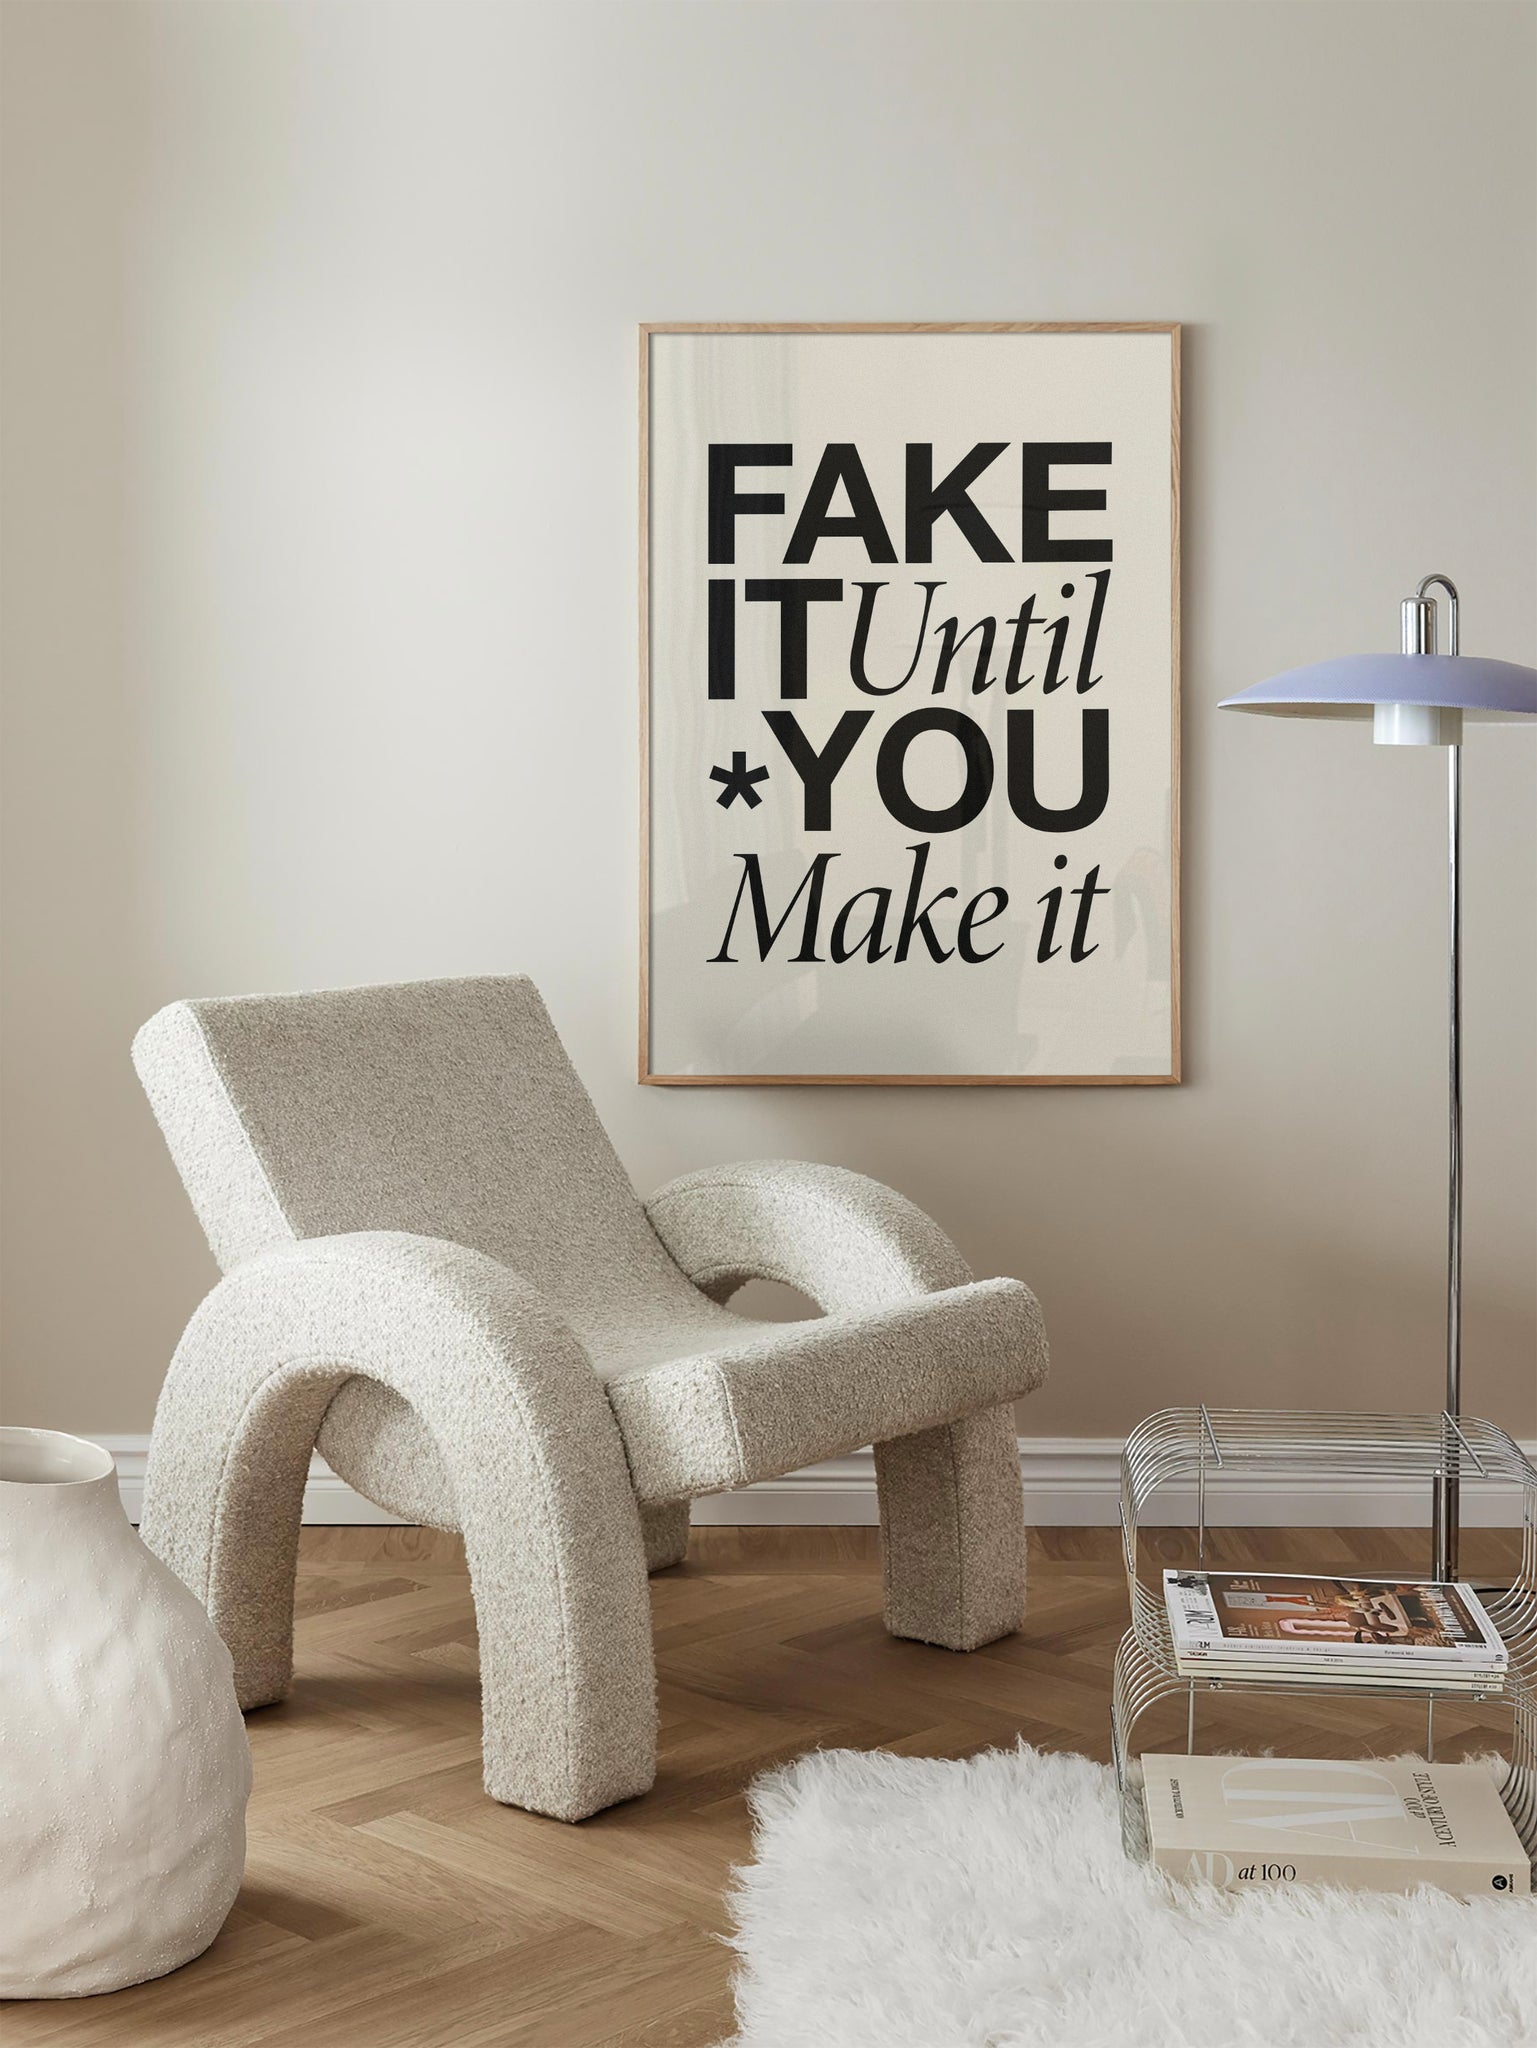 Fake It Until You Make It poster